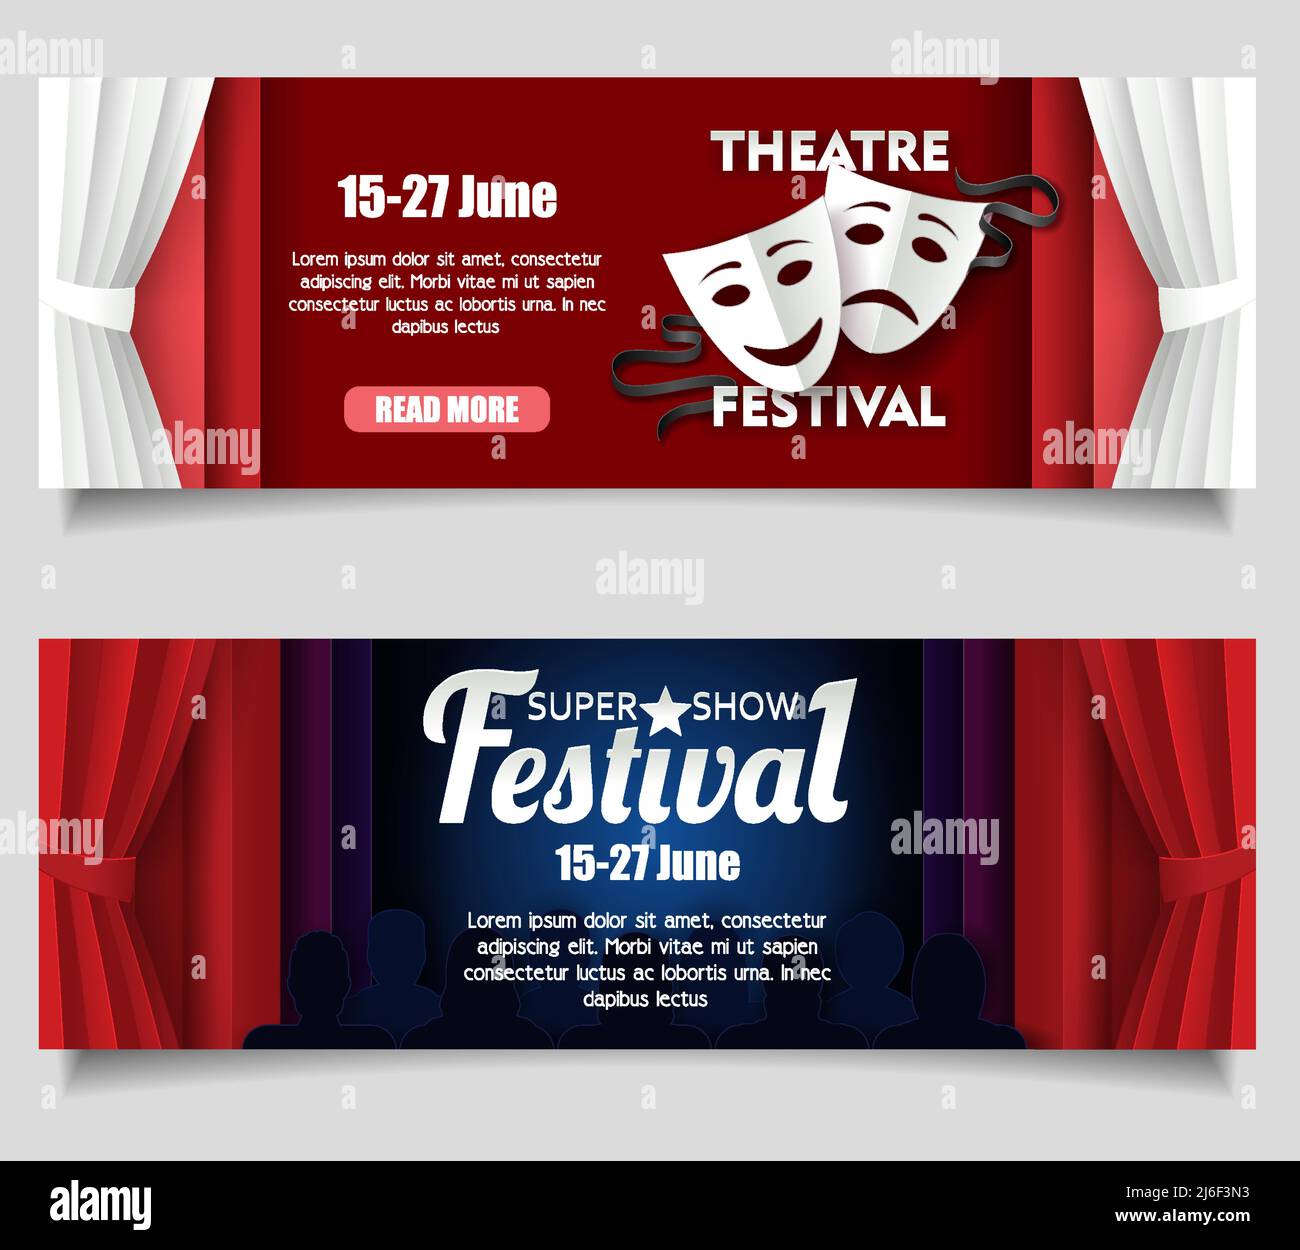 Theatre festival vector paper cut banner templates Stock Vector